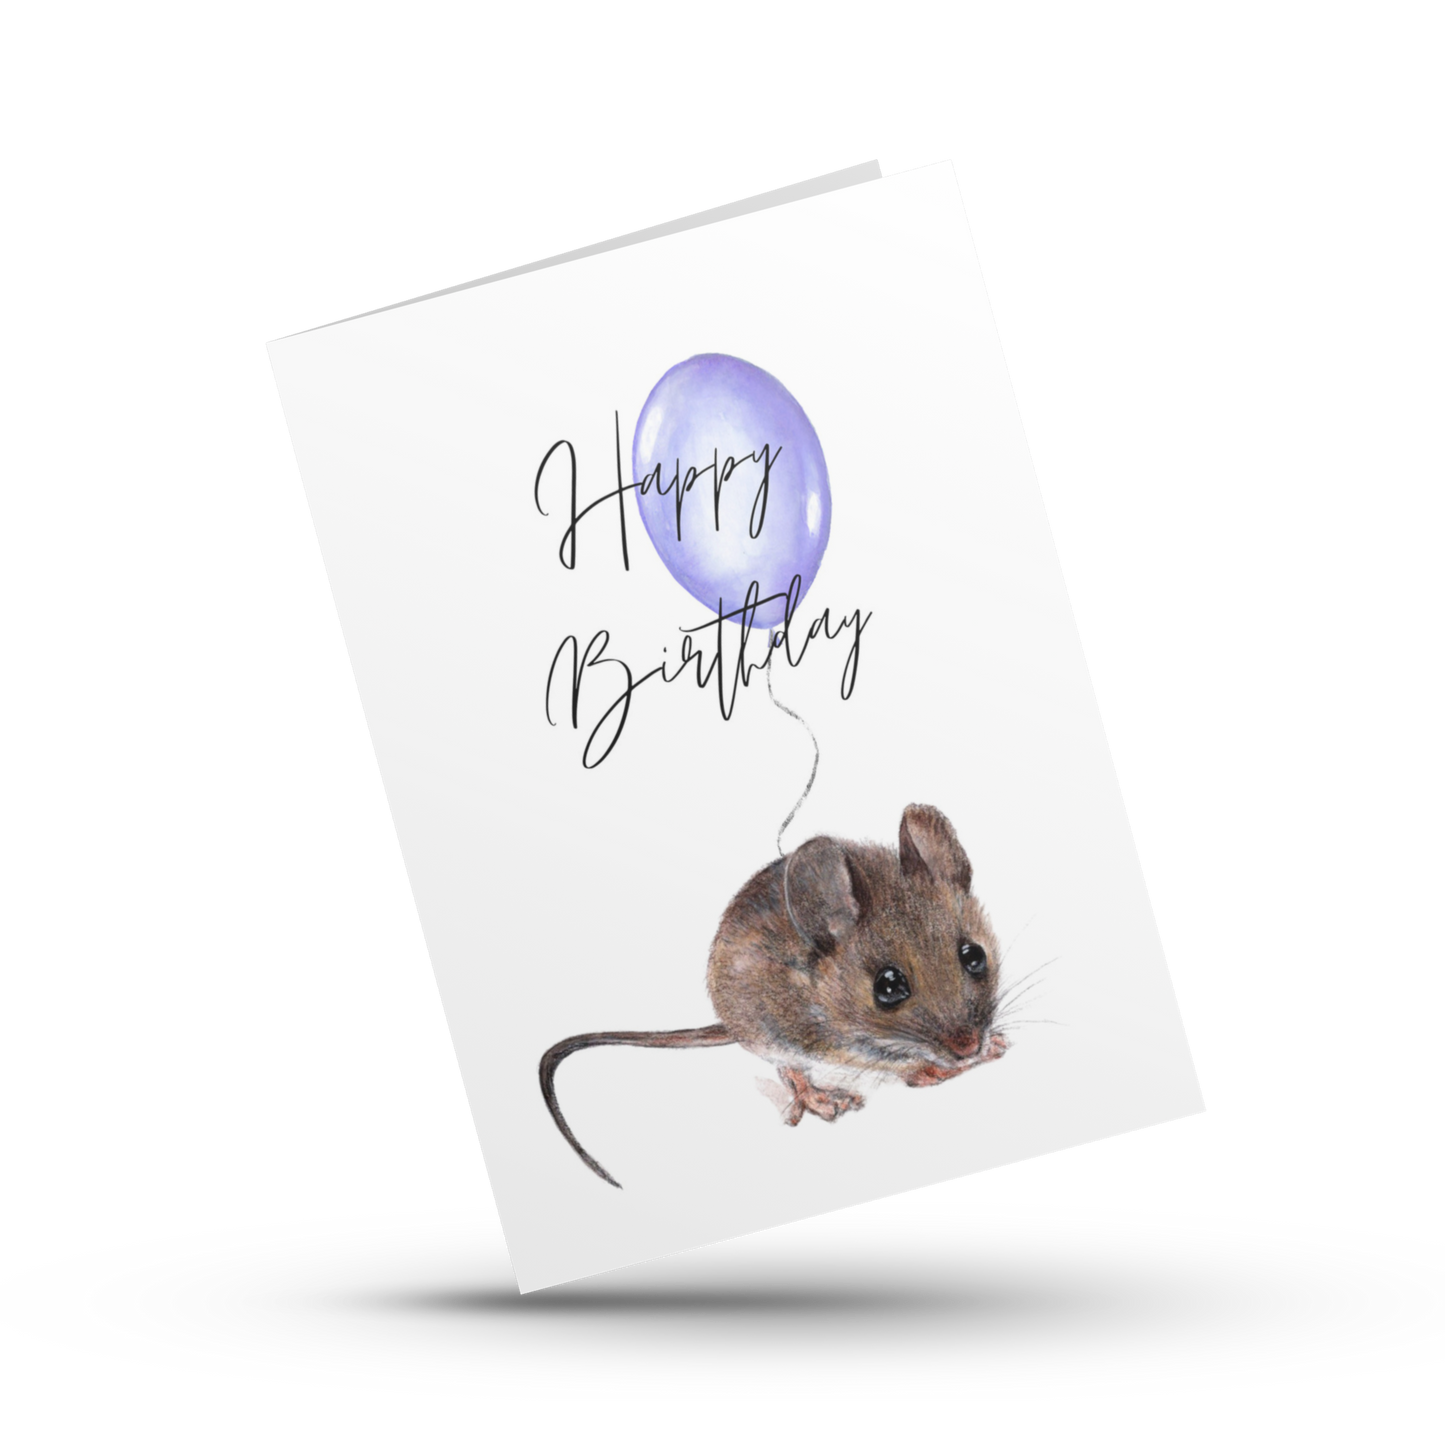 Happy birthday card, Cute baby mouse card, Birthday card for kids, Mouse with balloon card, Birthday card for girl, Boy, Gender Neutral card